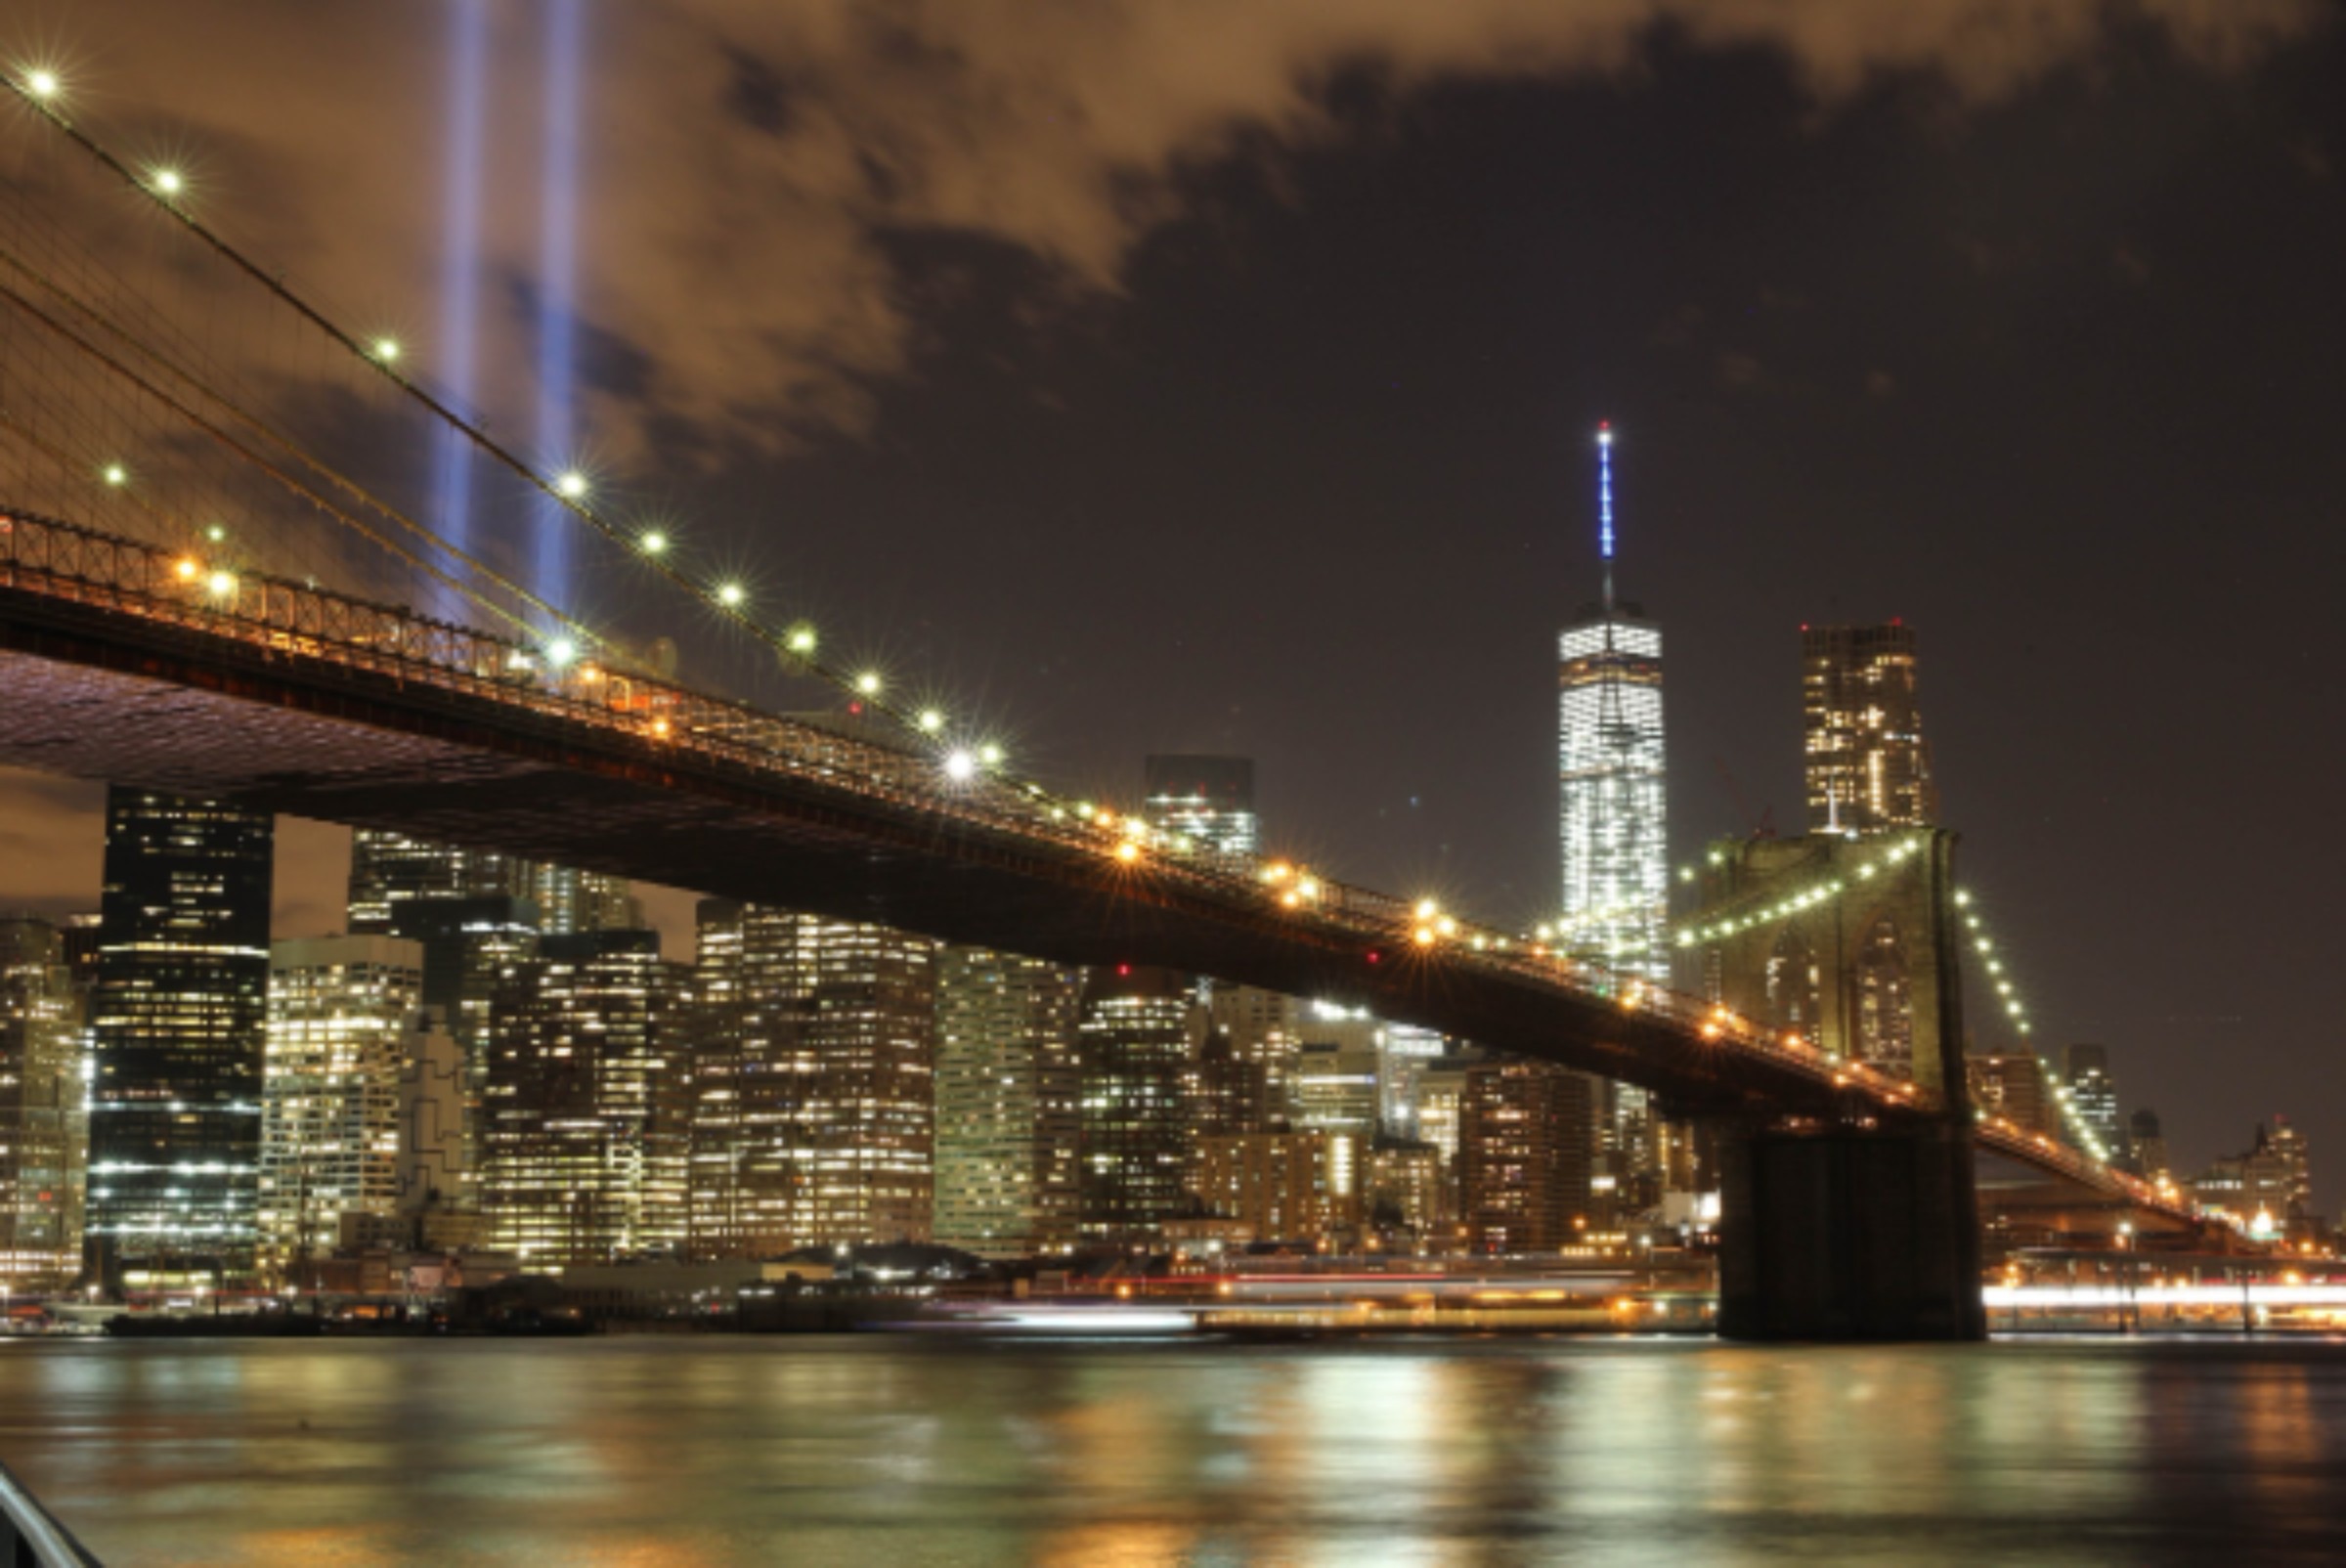 The Brooklyn Bridge at night in New York City